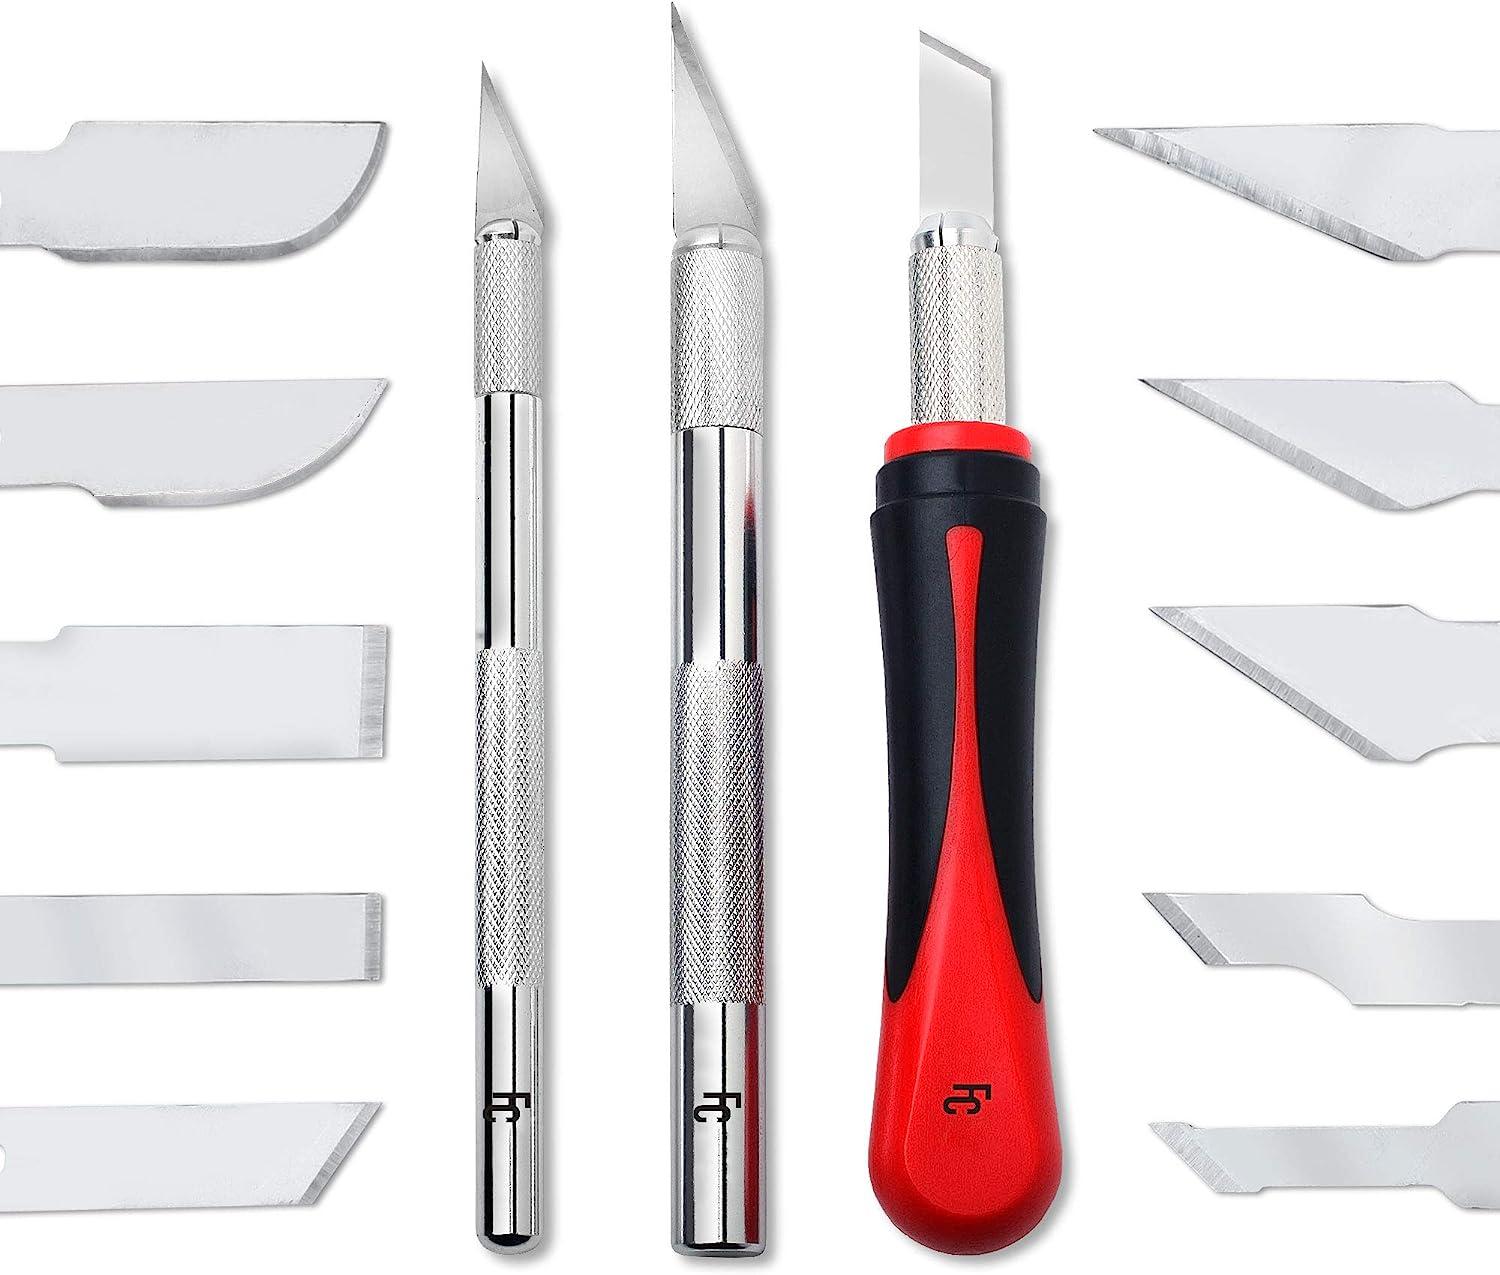 Fancii Precision Craft Knife Set 16 Pieces - Professional Razor